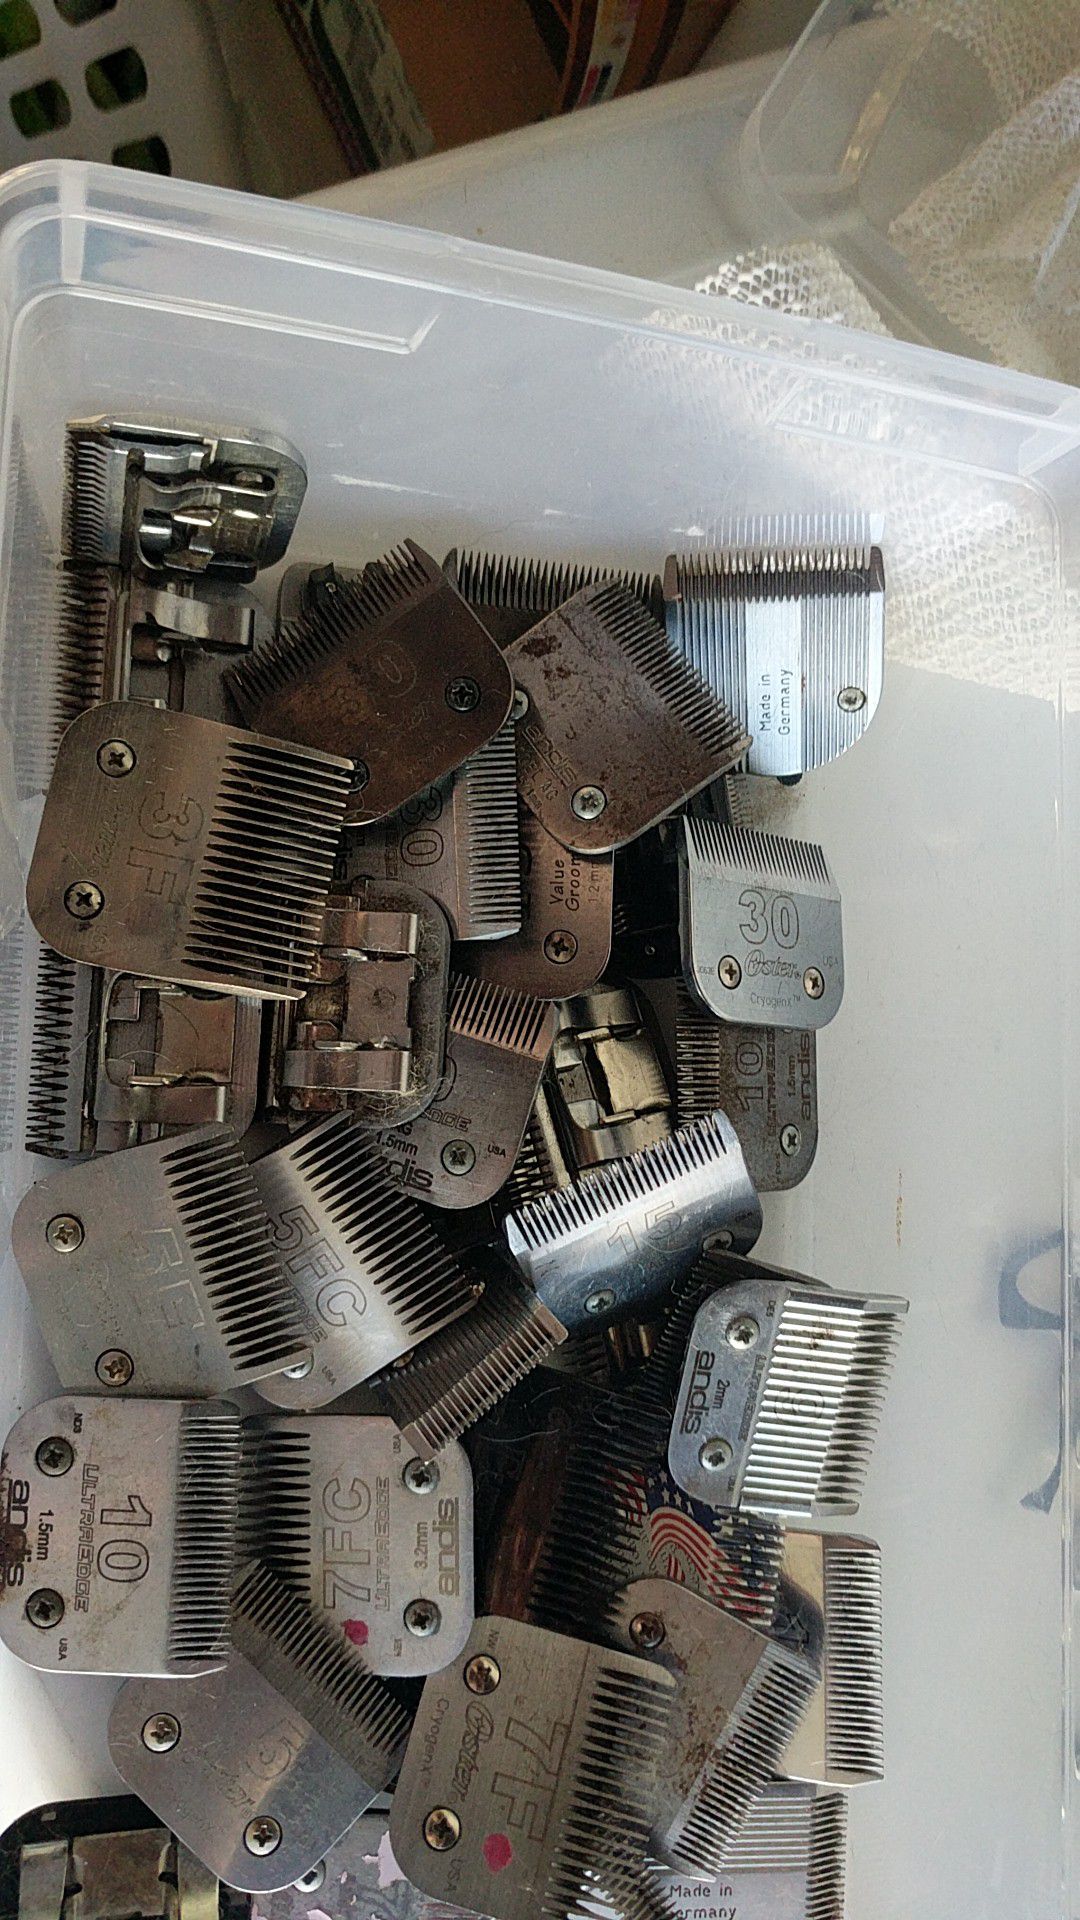 Box of grooming blades